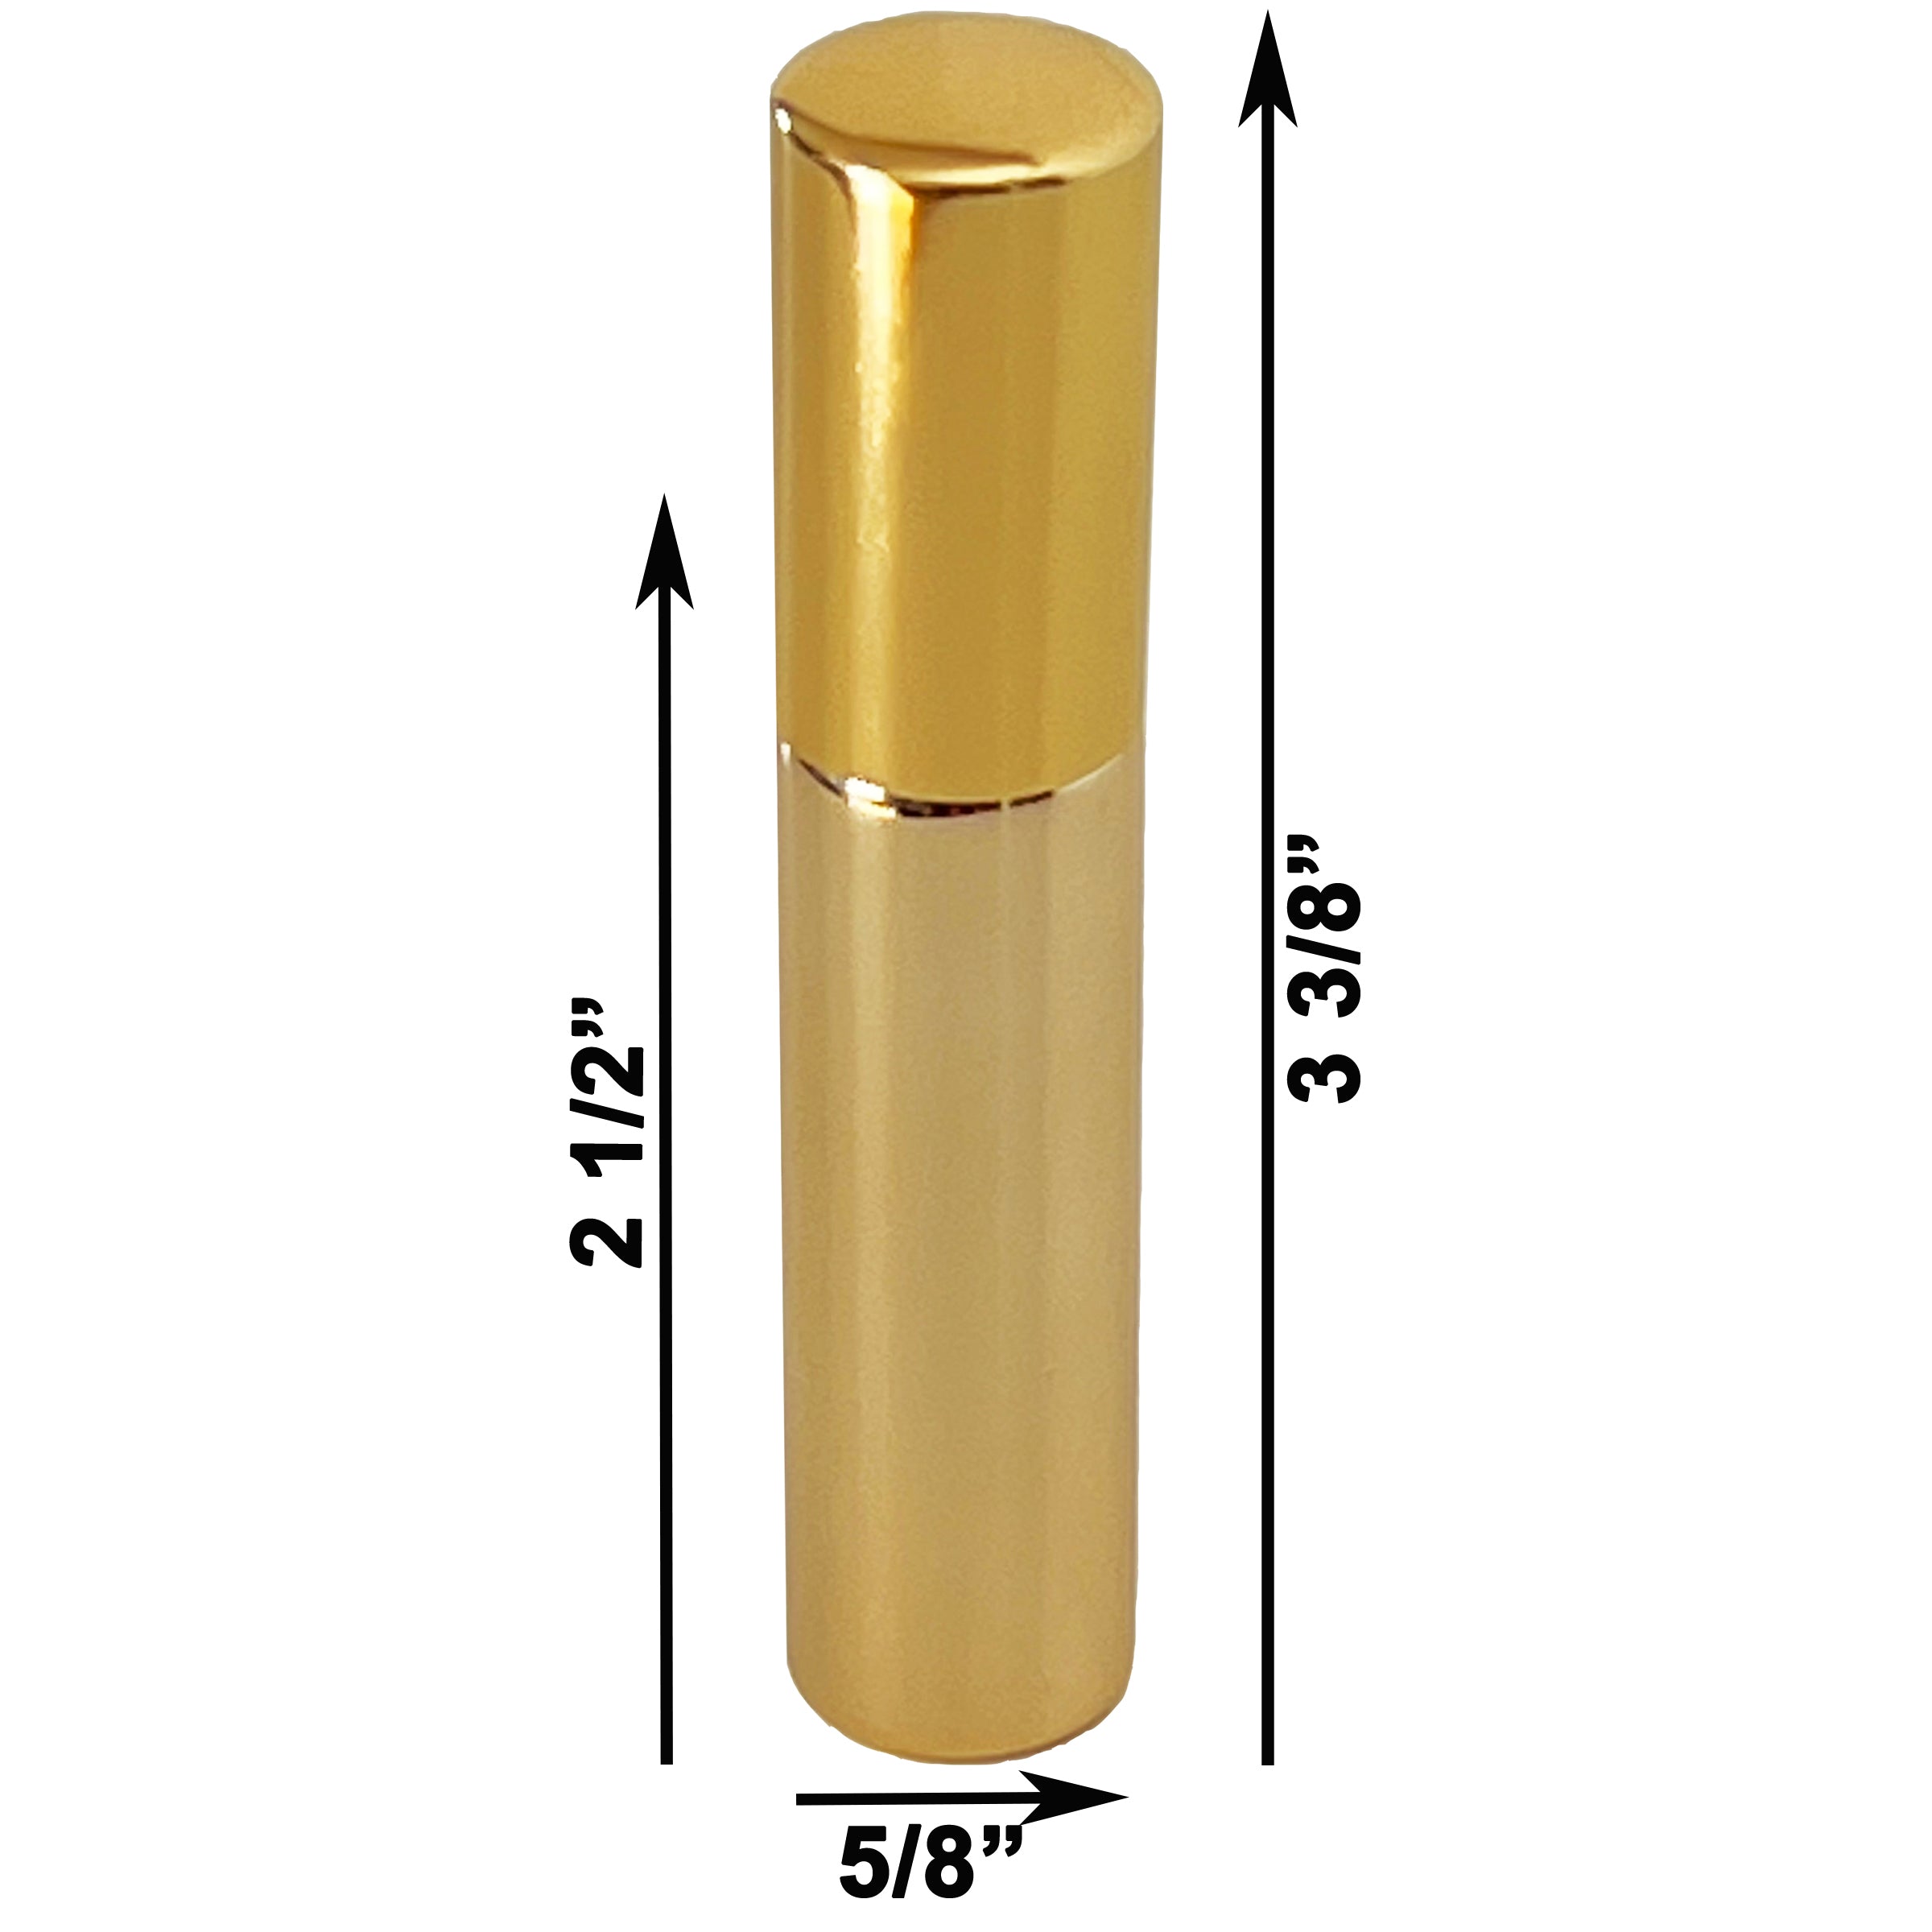 10ml 0.33oz Gold UV Electroplated Glass Spray Bottles